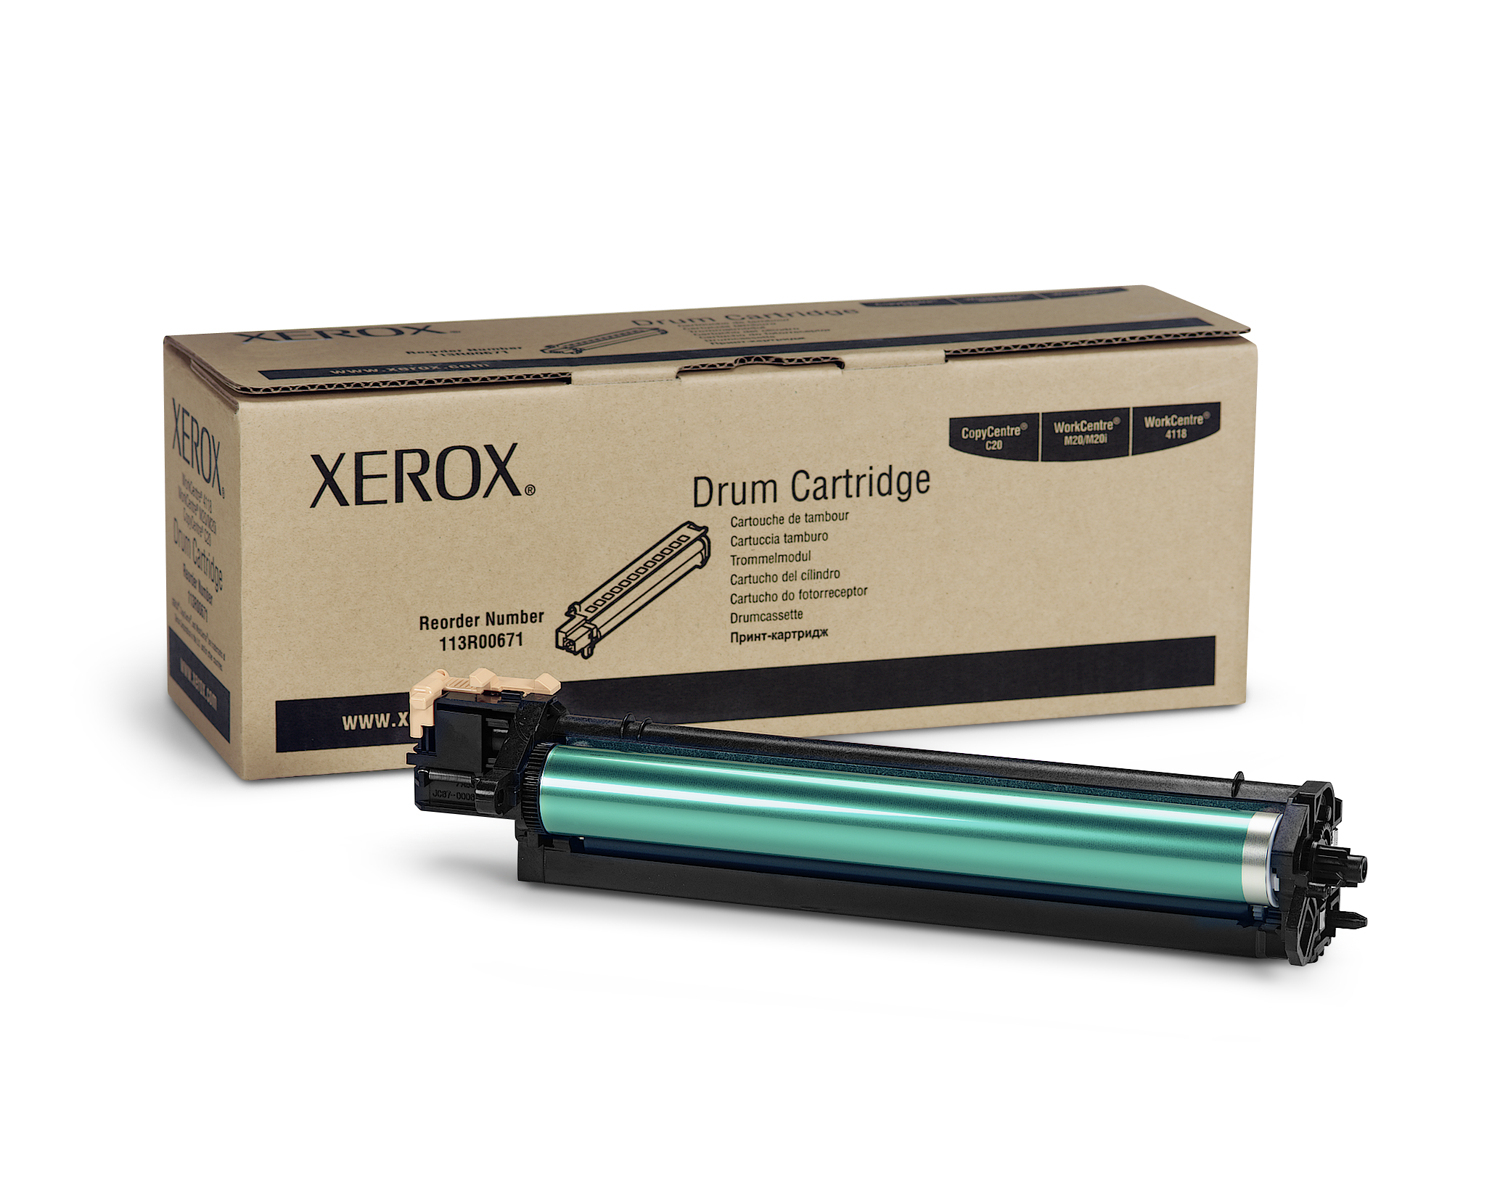 Xerox workcentre 4118, m20, m20i, copycentre c20 drum standard capacity 20.000 pagina s 1-pack